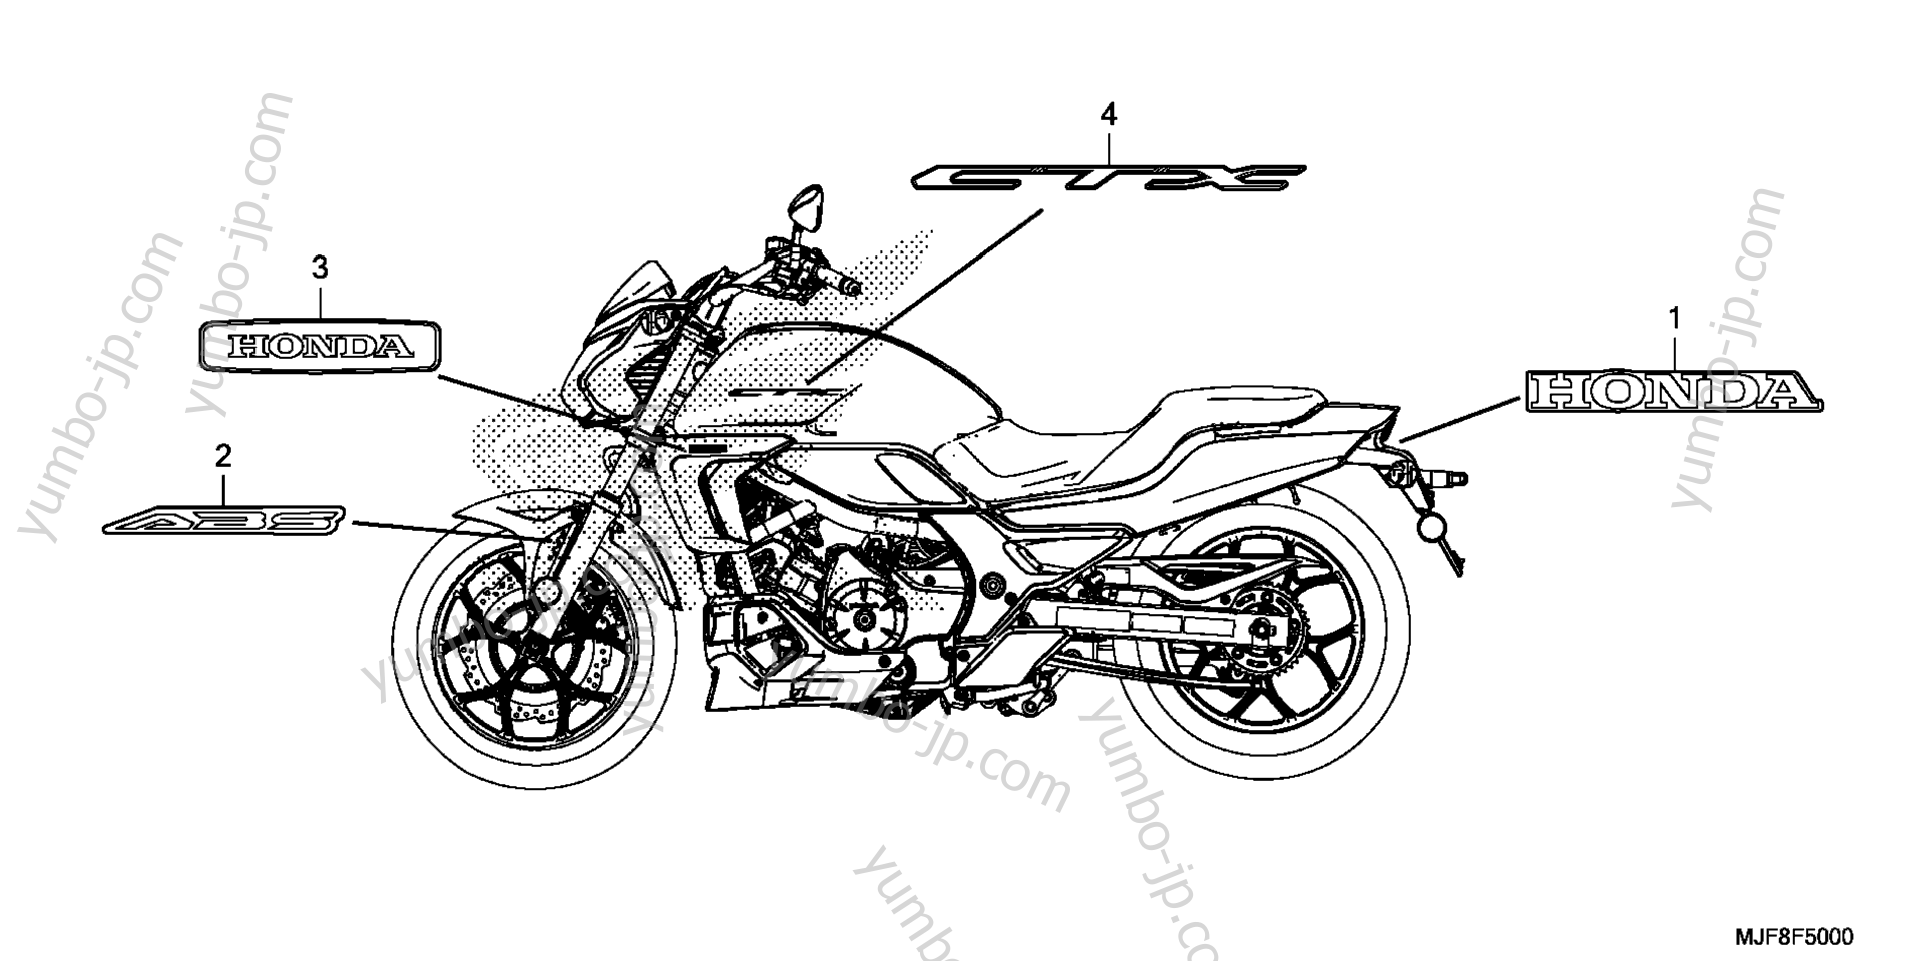 MARK / EMBLEM for motorcycles HONDA CTX700ND A 2016 year